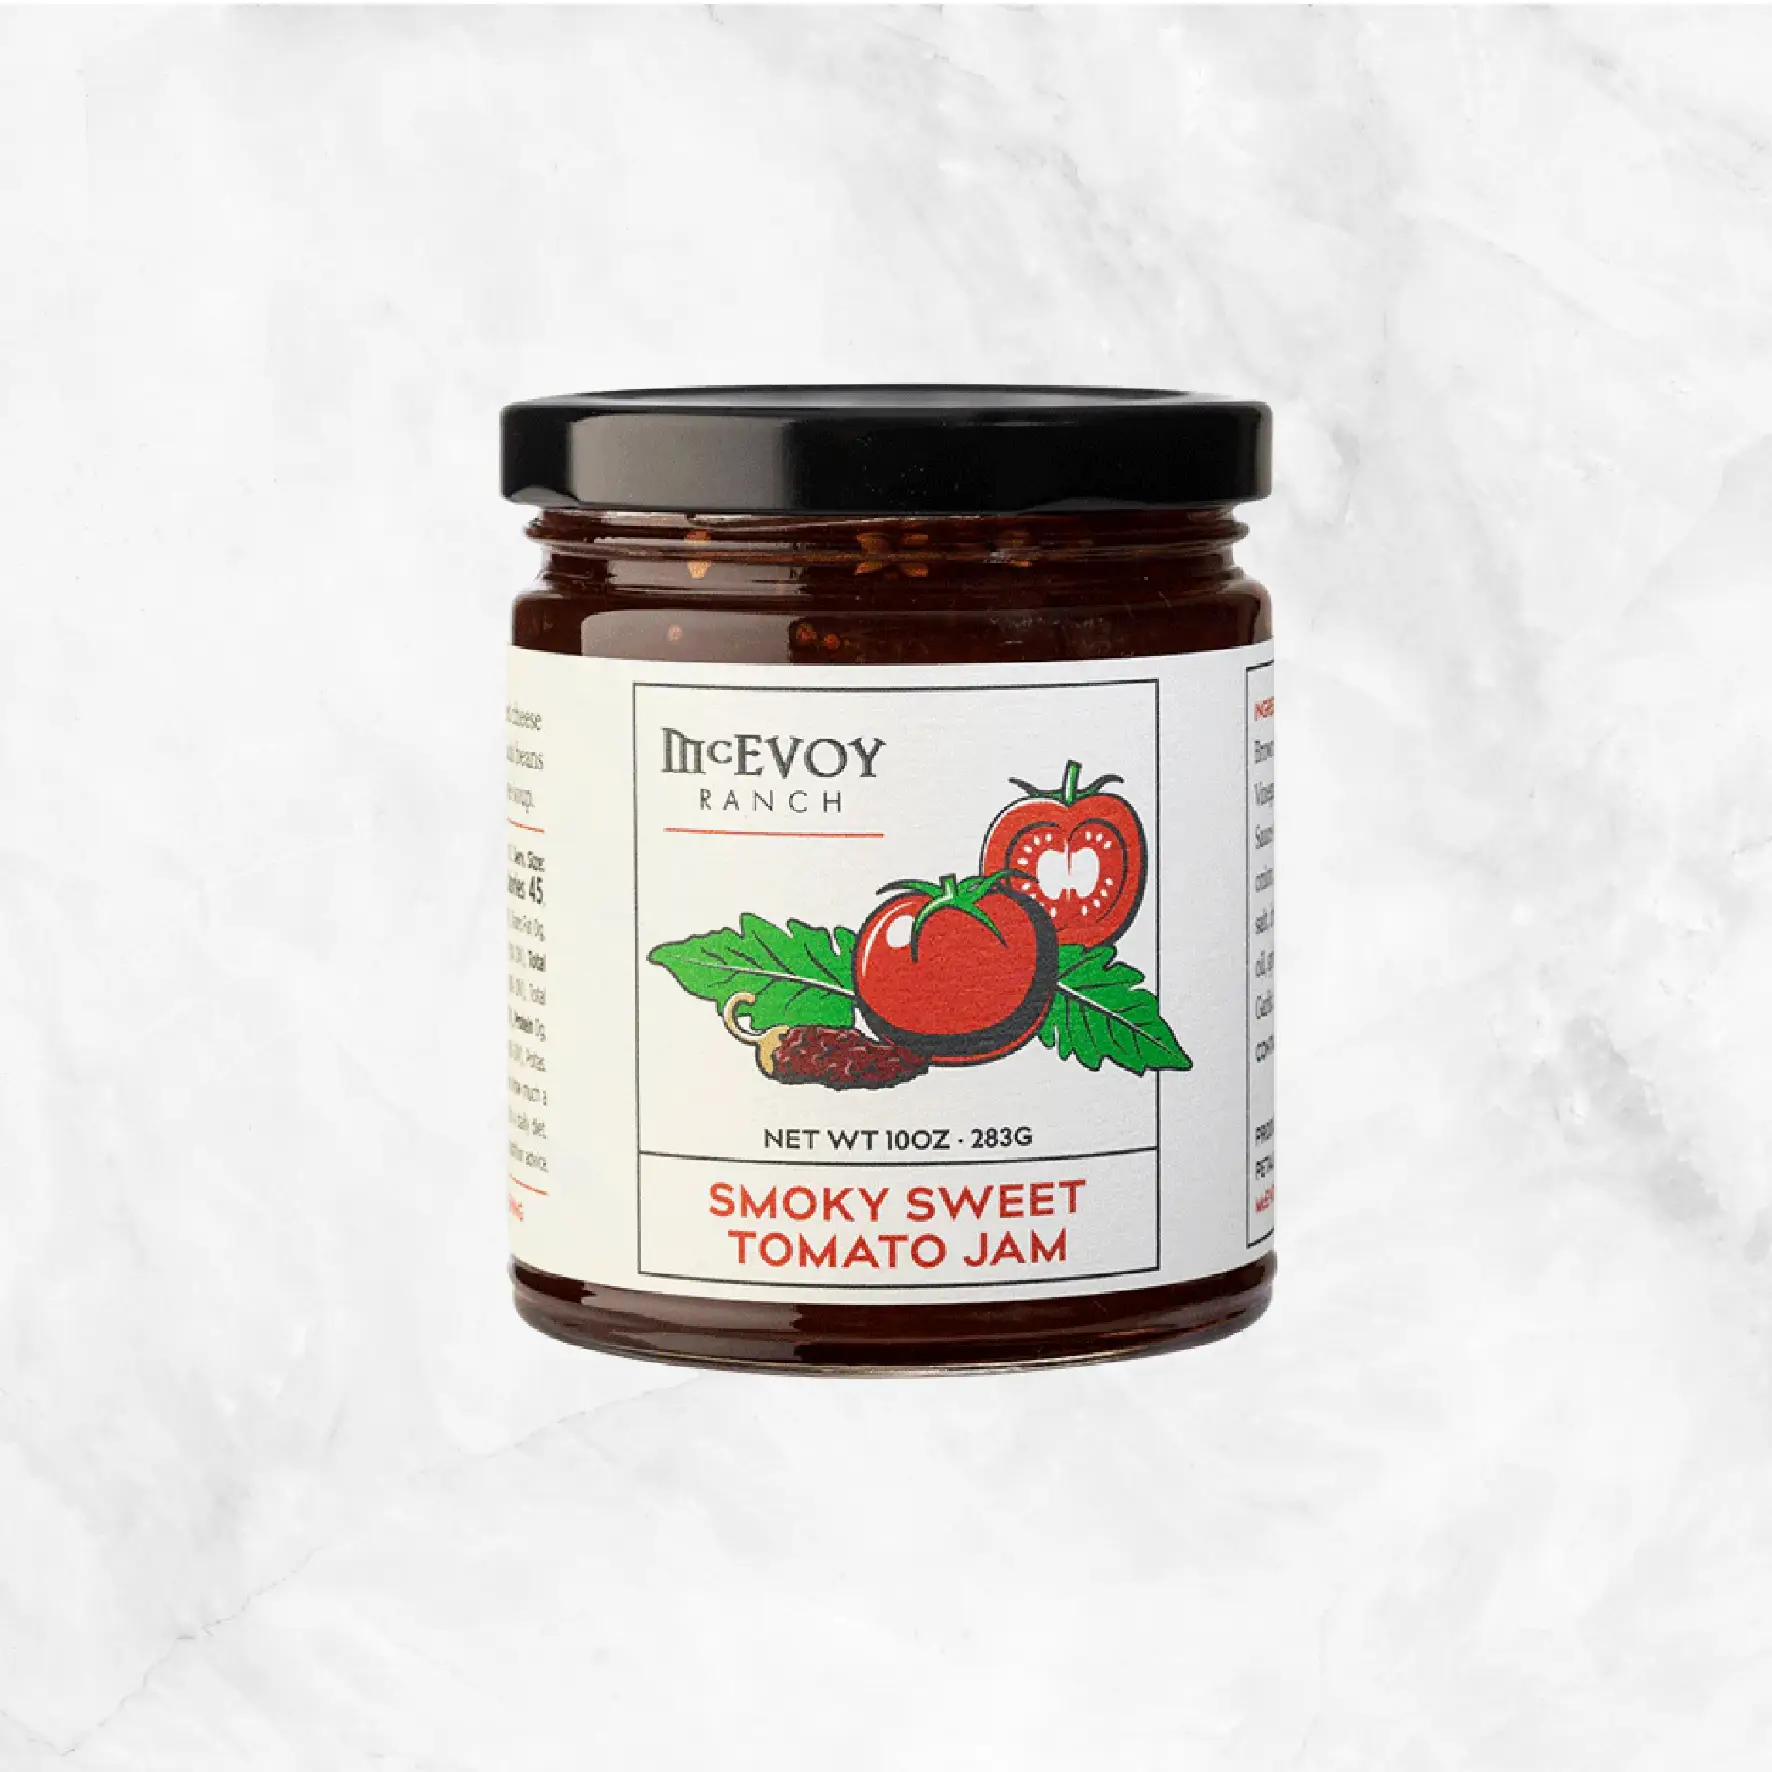 Smoky Sweet Tomato Jam Delivery